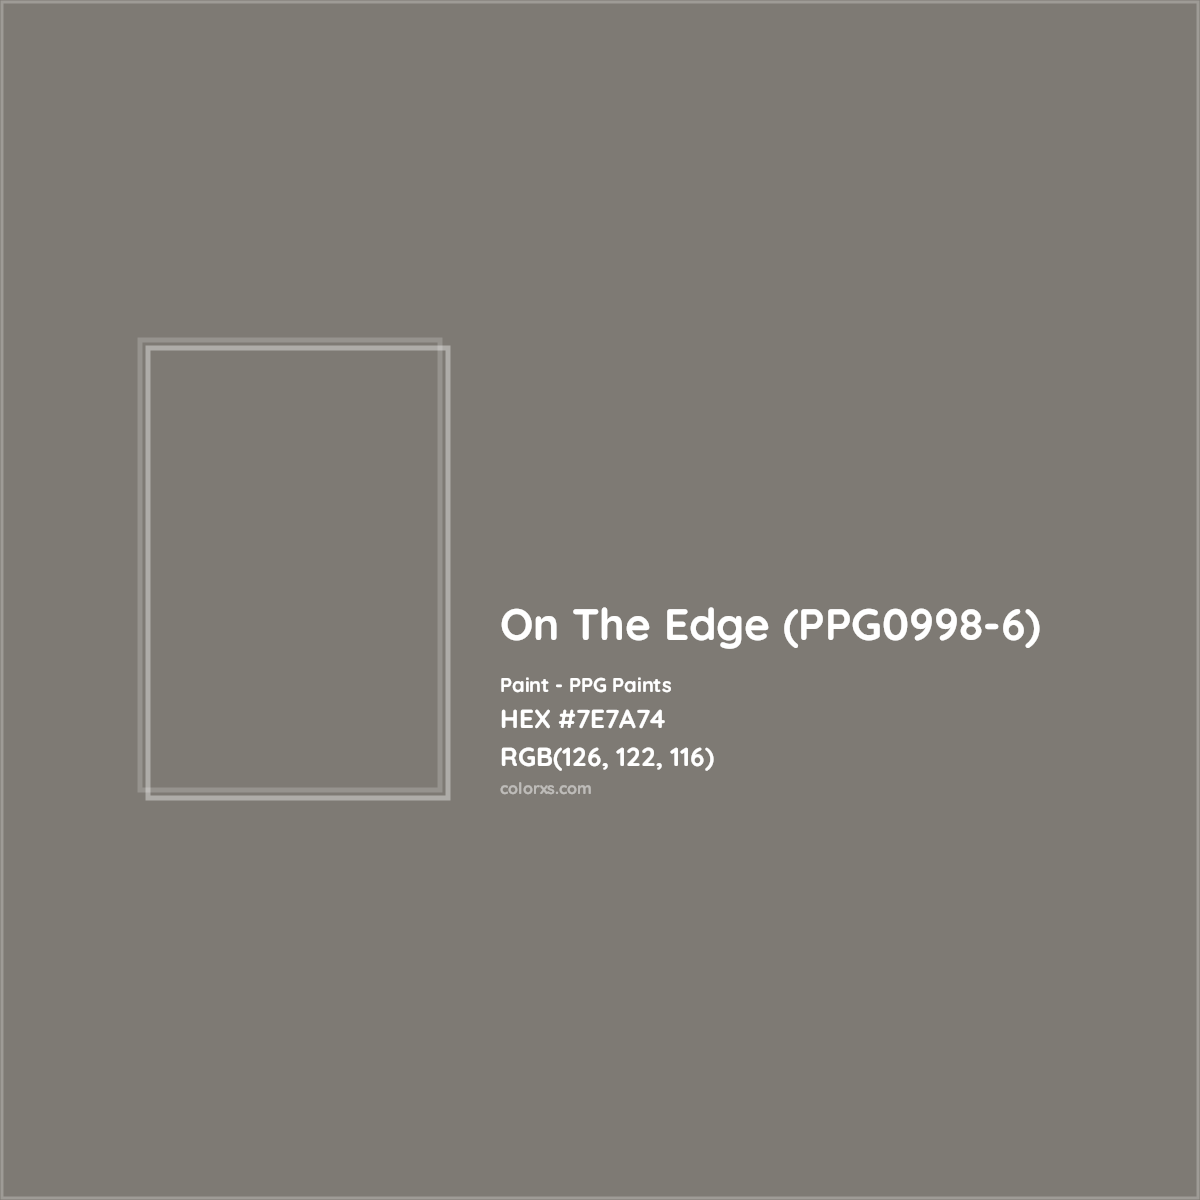 HEX #7E7A74 On The Edge (PPG0998-6) Paint PPG Paints - Color Code